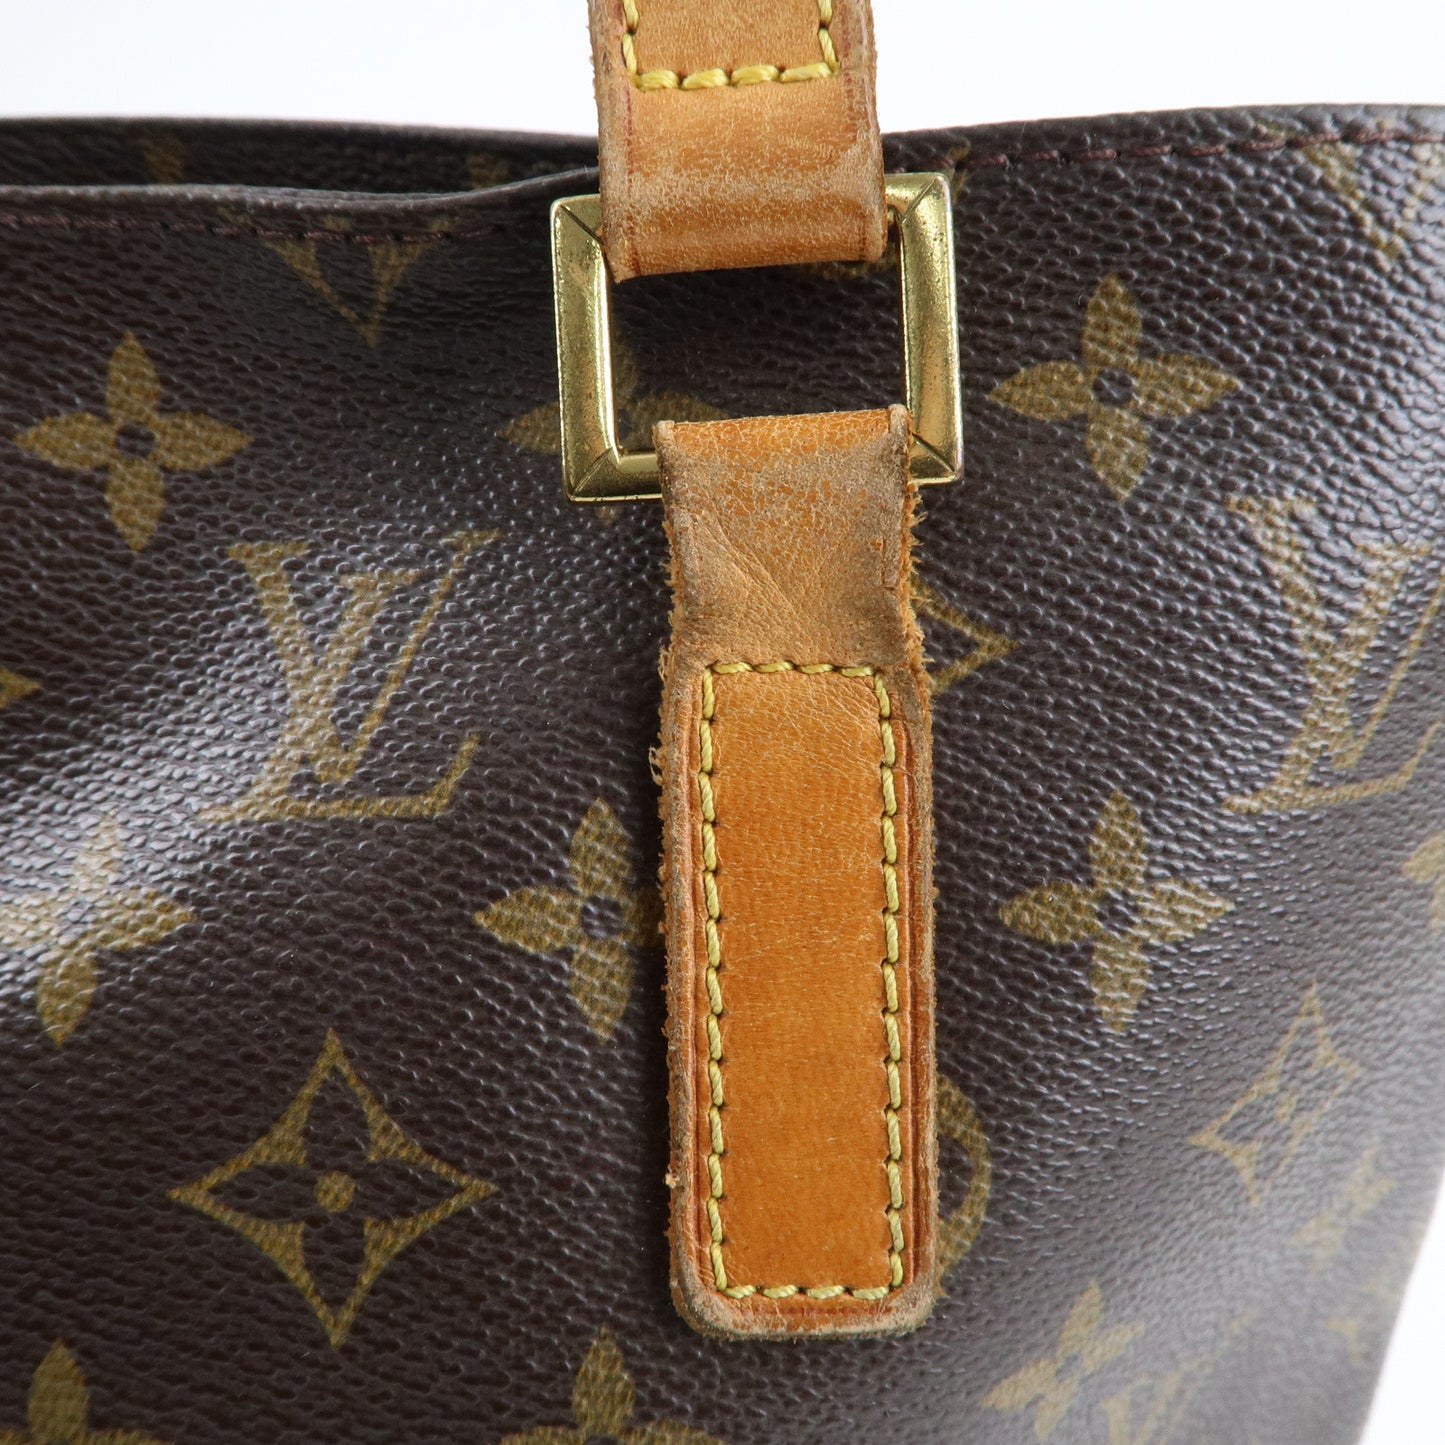 Louis Vuitton Monogram Vavin GM Tote Bag Hand Bag M51170